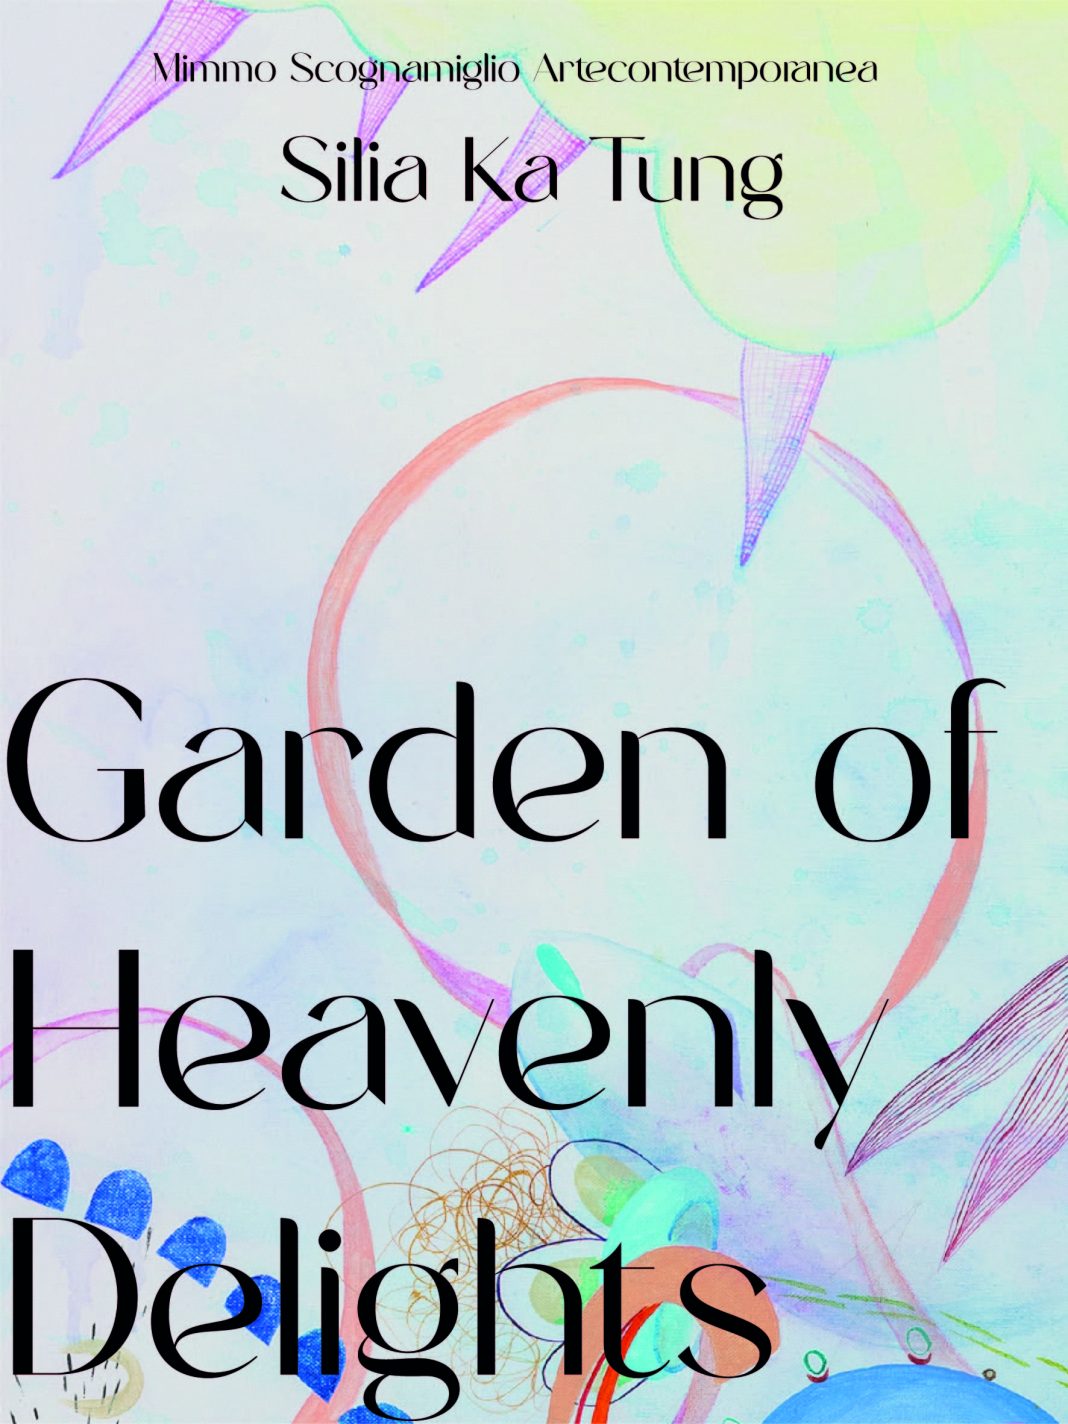 Silia Ka Tung – Garden of Heavenly Delightshttps://www.exibart.com/repository/media/formidable/11/img/452/Invito_Silia-Ka-Tung_2-1068x1424.jpg